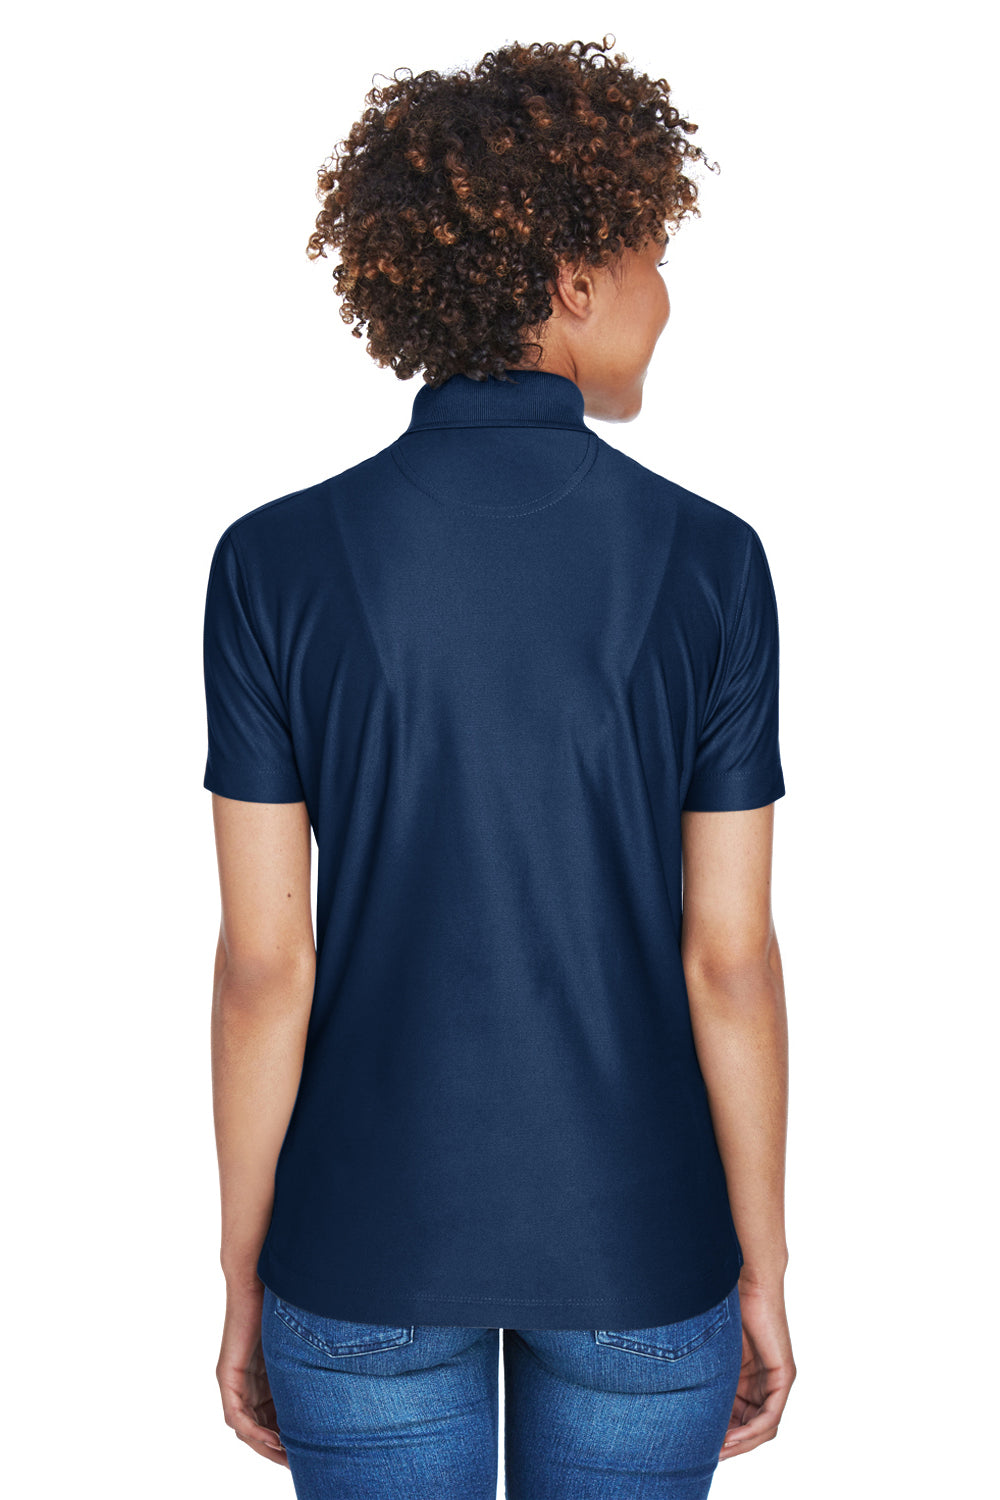 UltraClub 8414 Womens Cool & Dry Elite Performance Moisture Wicking Short Sleeve Polo Shirt Navy Blue Back